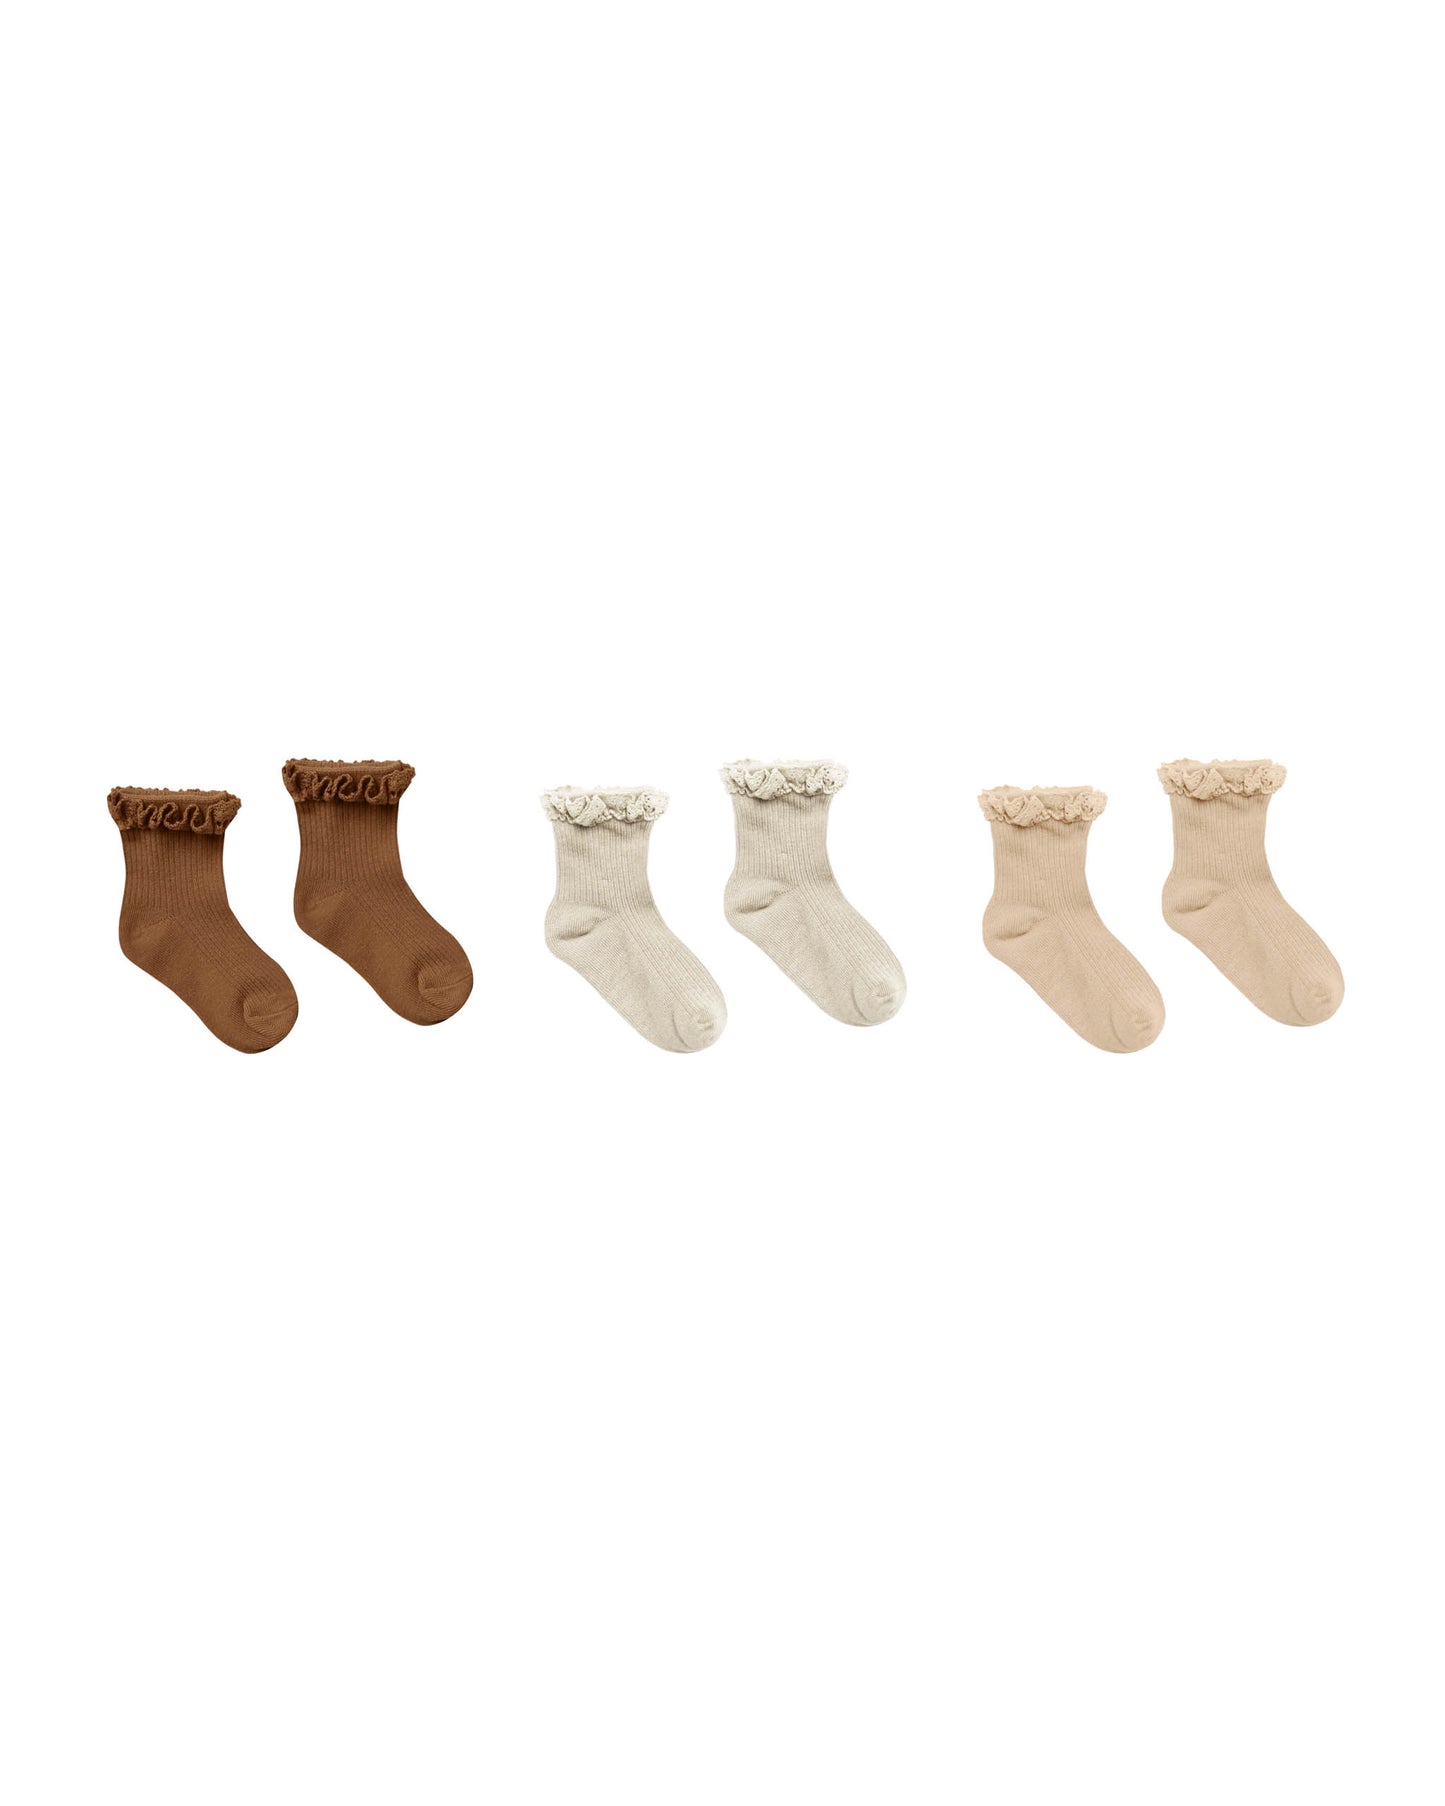 Ruffle Socks, 3 Pack - Chocolate, Natural, Shell